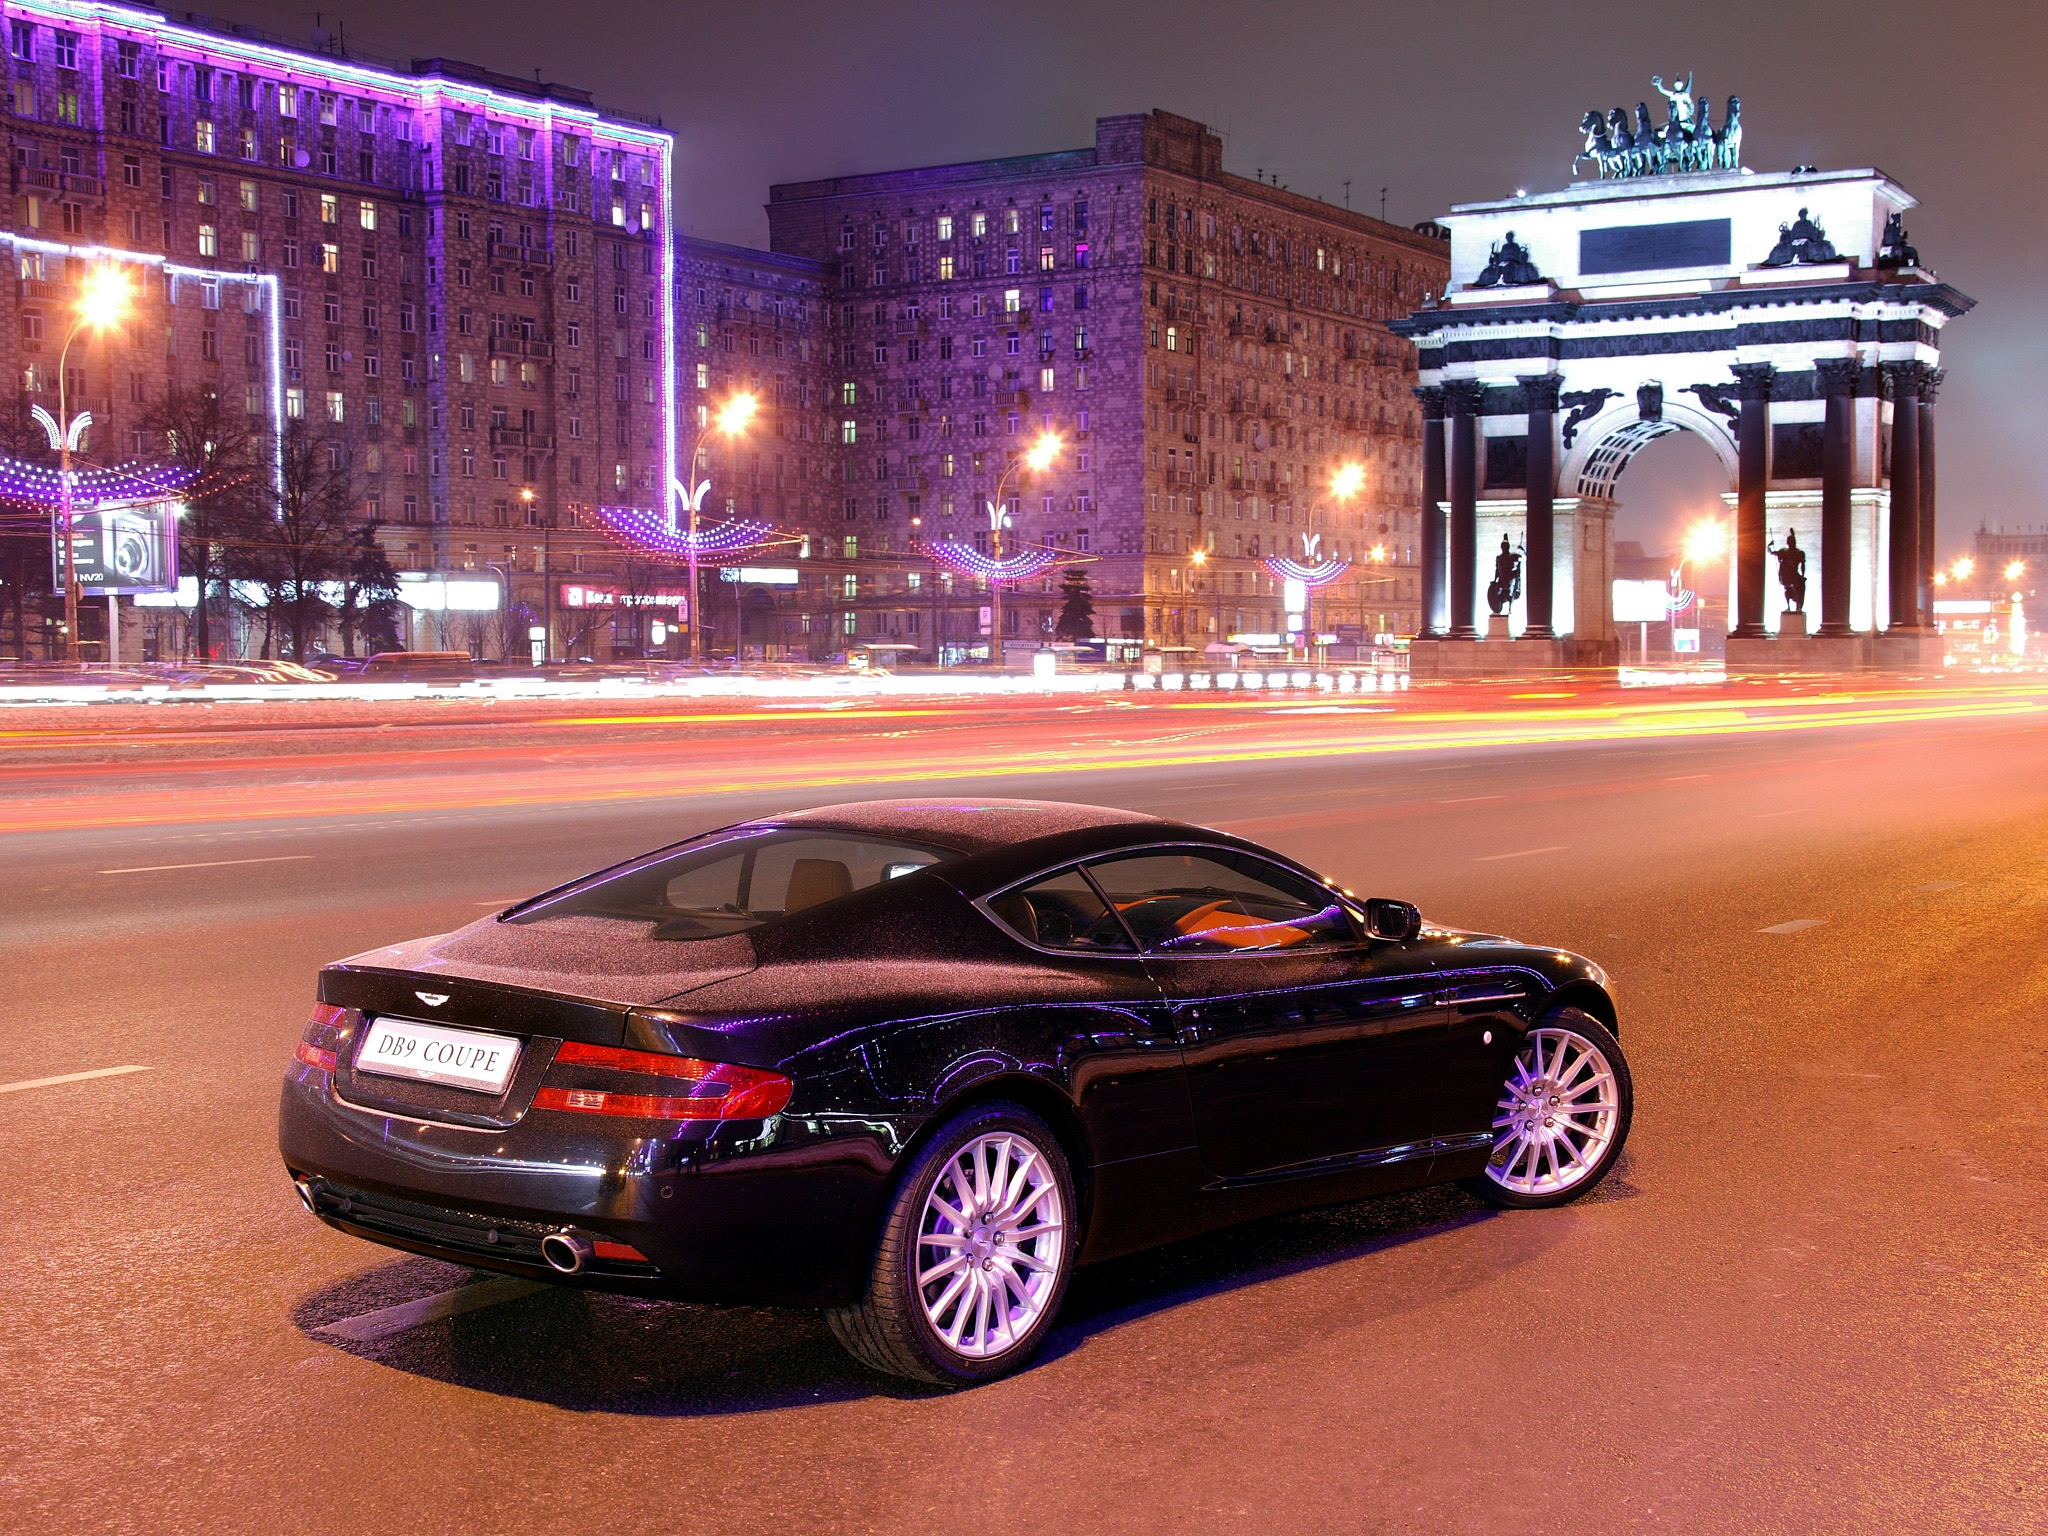 cars, black, auto, aston martin, city, building, lights, asphalt, side view, style, db9 High Definition image